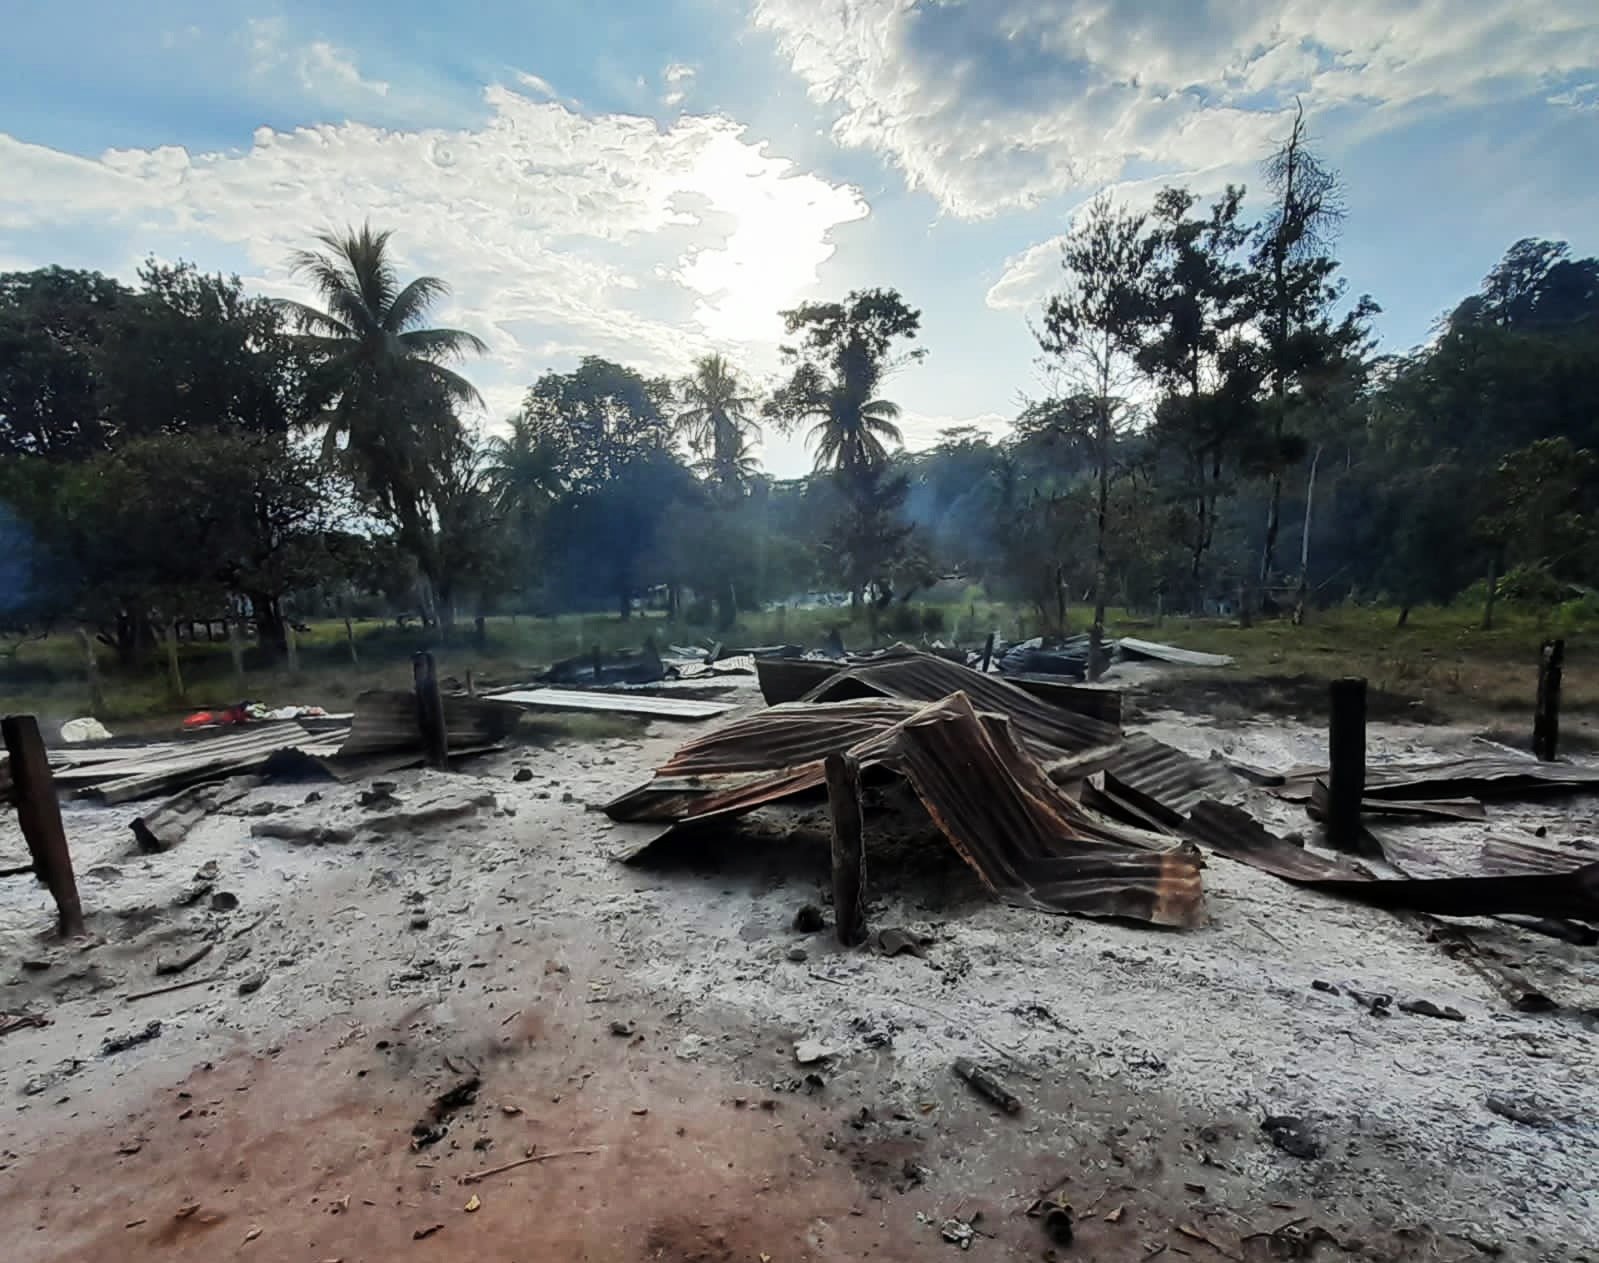 Homes burnt during the Wilu massacre